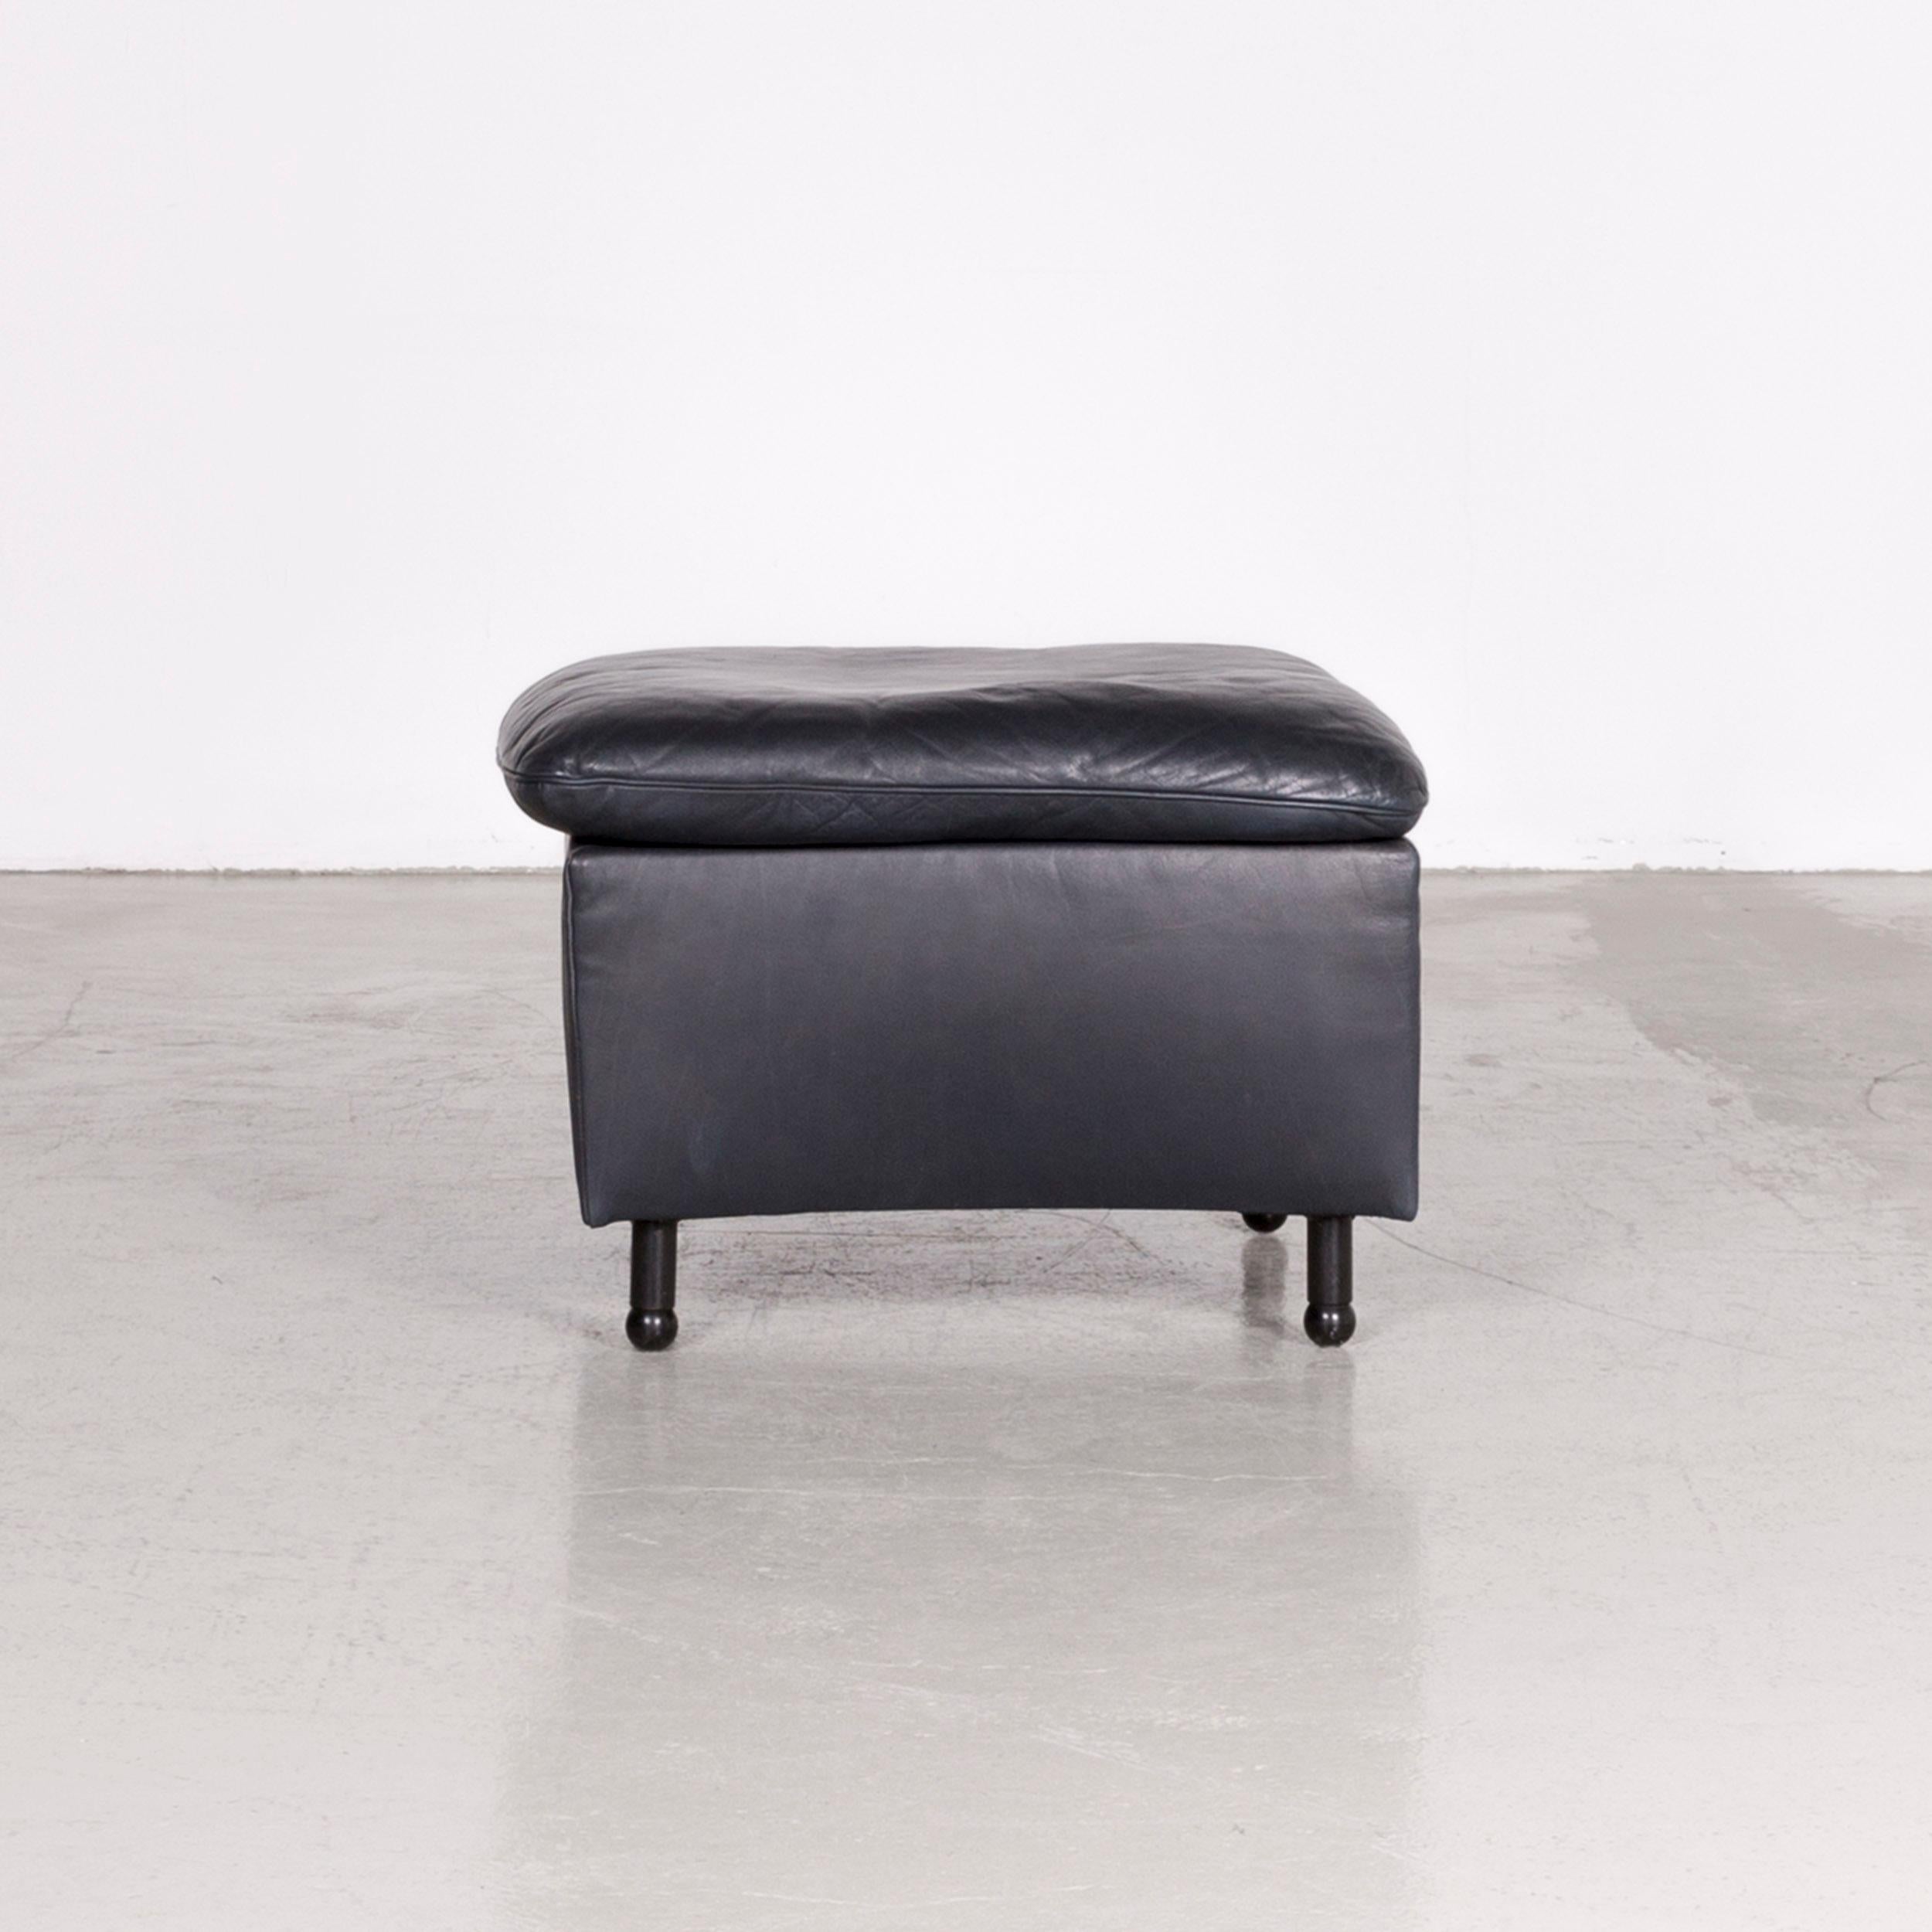 German De Sede DS 140 Designer Leather Sofa Black Three-Seat Function Modern For Sale